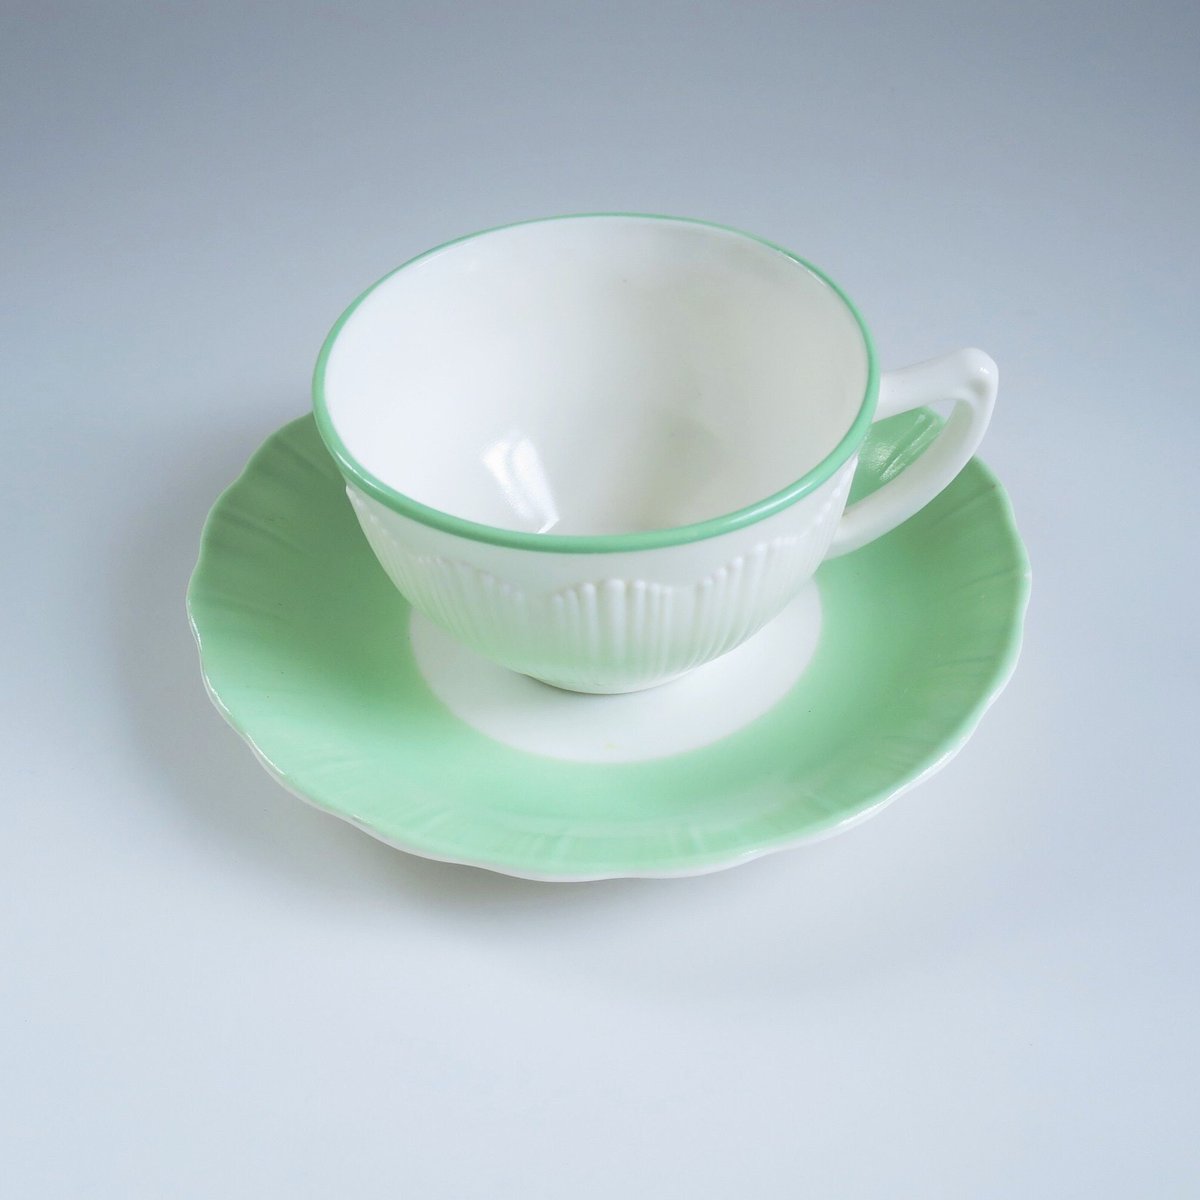 Vintage Macbeth Evans Tea Cup and Saucer Set in Mint Green, Cremax Bordette Teacup Set tuppu.net/52a3a28b #SMILEtt23 #EtsyteamUnity #Vintage4Sale #TMTinsta #AntiqueGlass